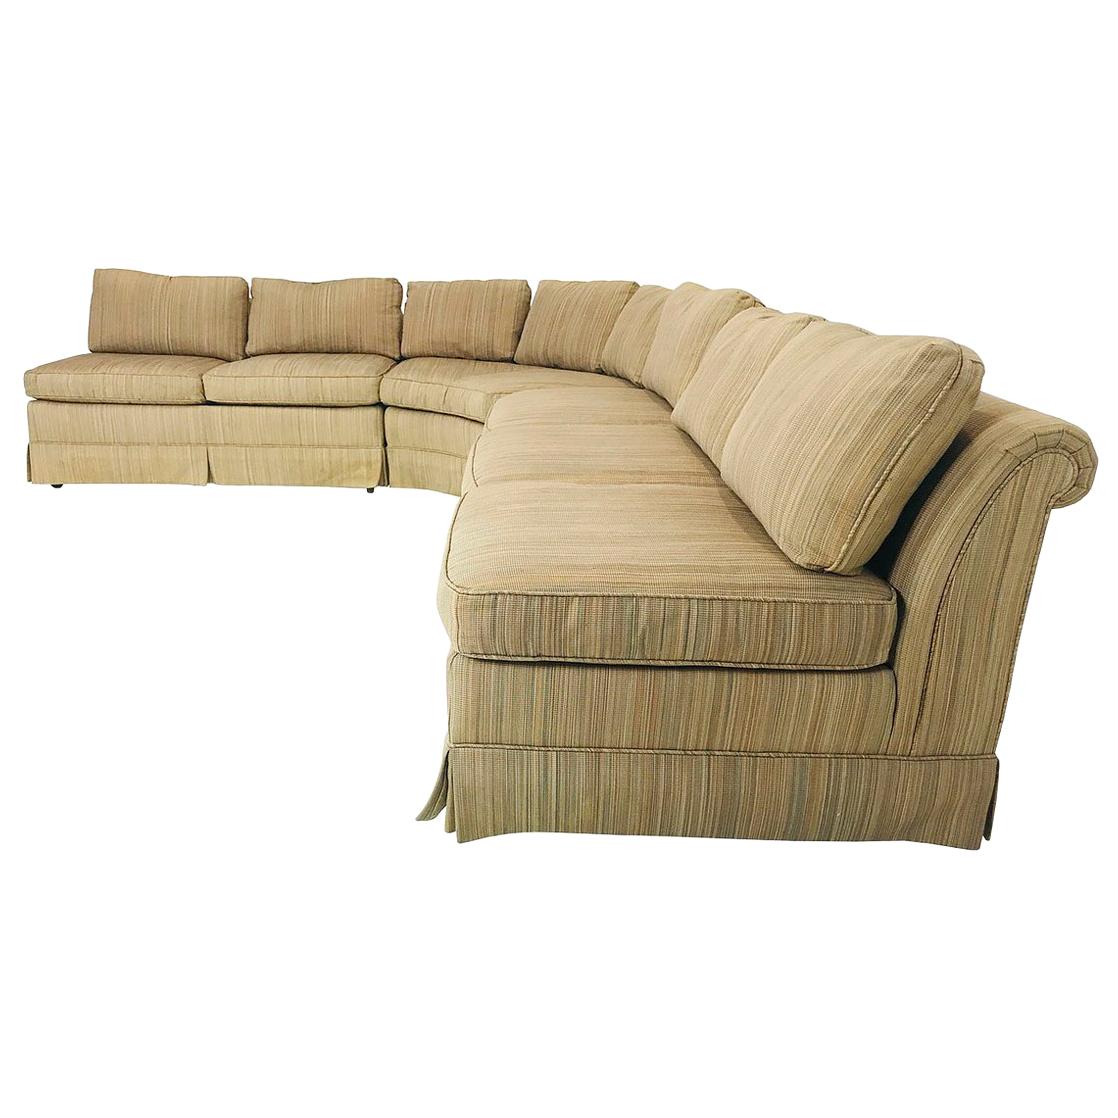 Three-Piece Midcentury Slipper Sofa by Baker